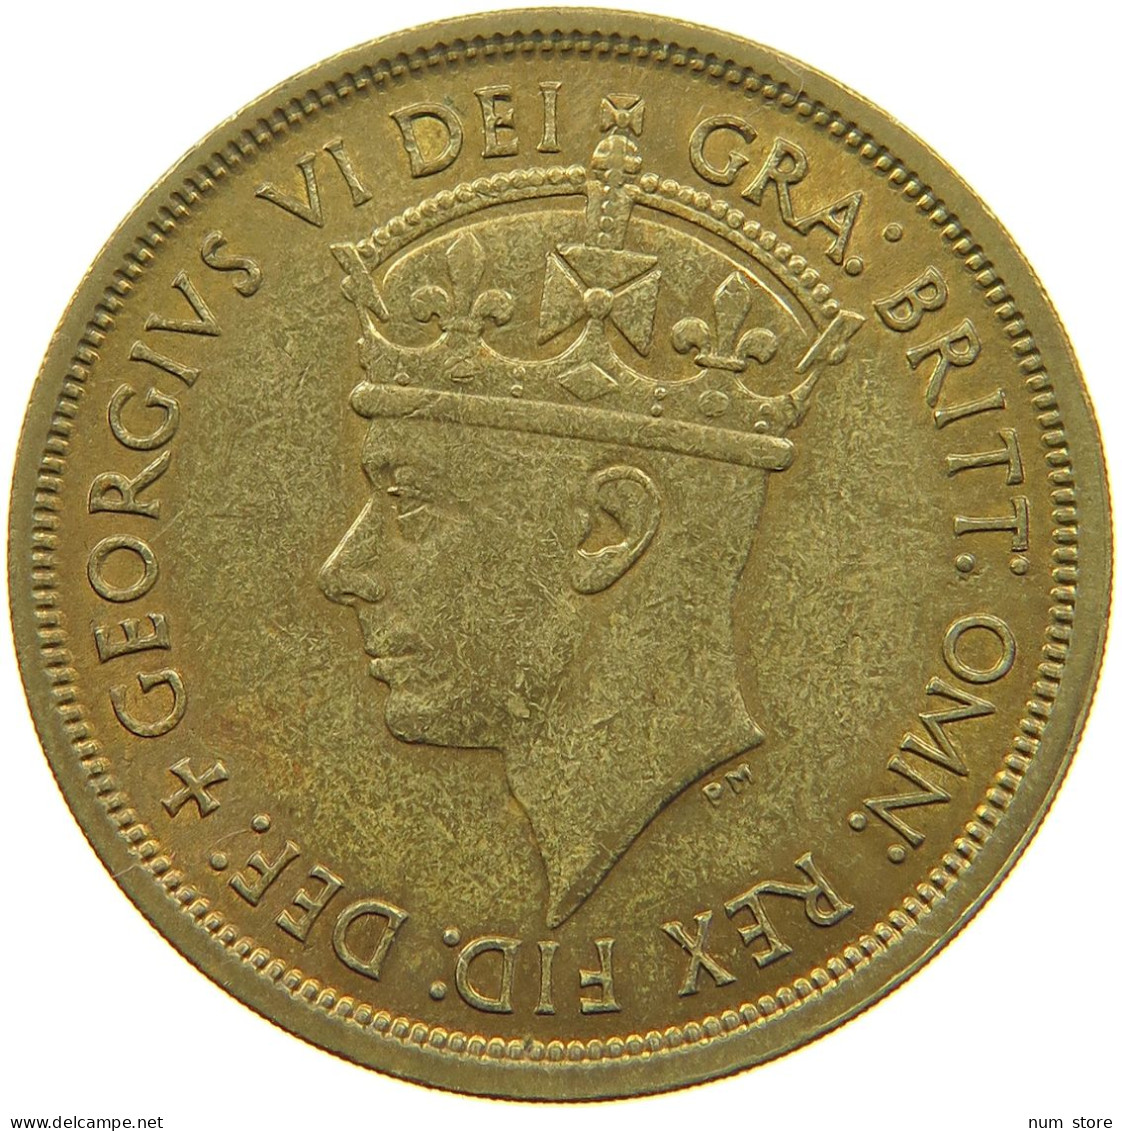 WEST AFRICA 2 SHILLINGS 1951 H George VI. (1936-1952) #t085 0067 - Sammlungen